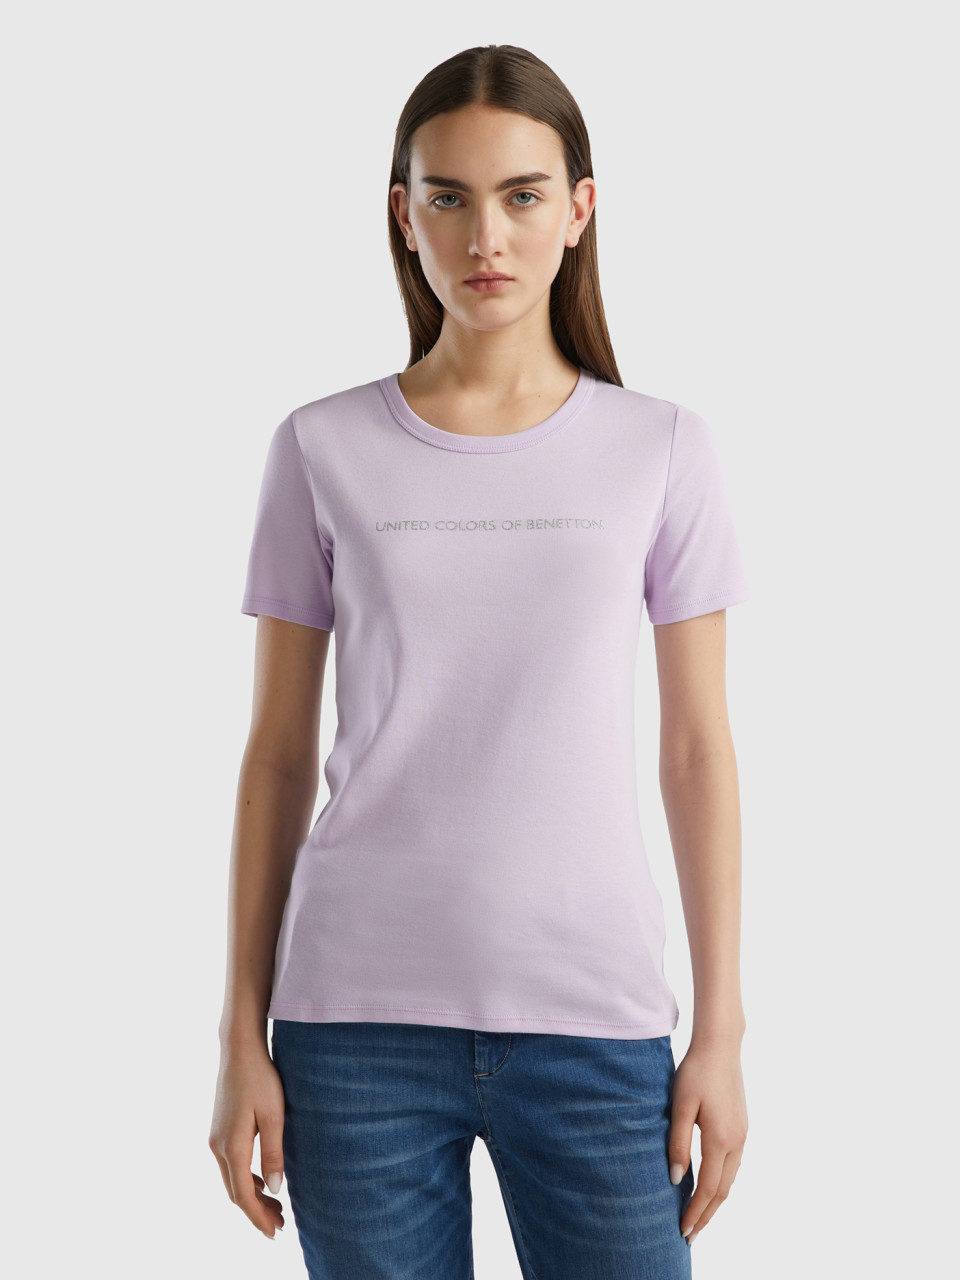 Benetton, T-shirt In 100% Cotton With Glitter Print Logo, Lilac, Women